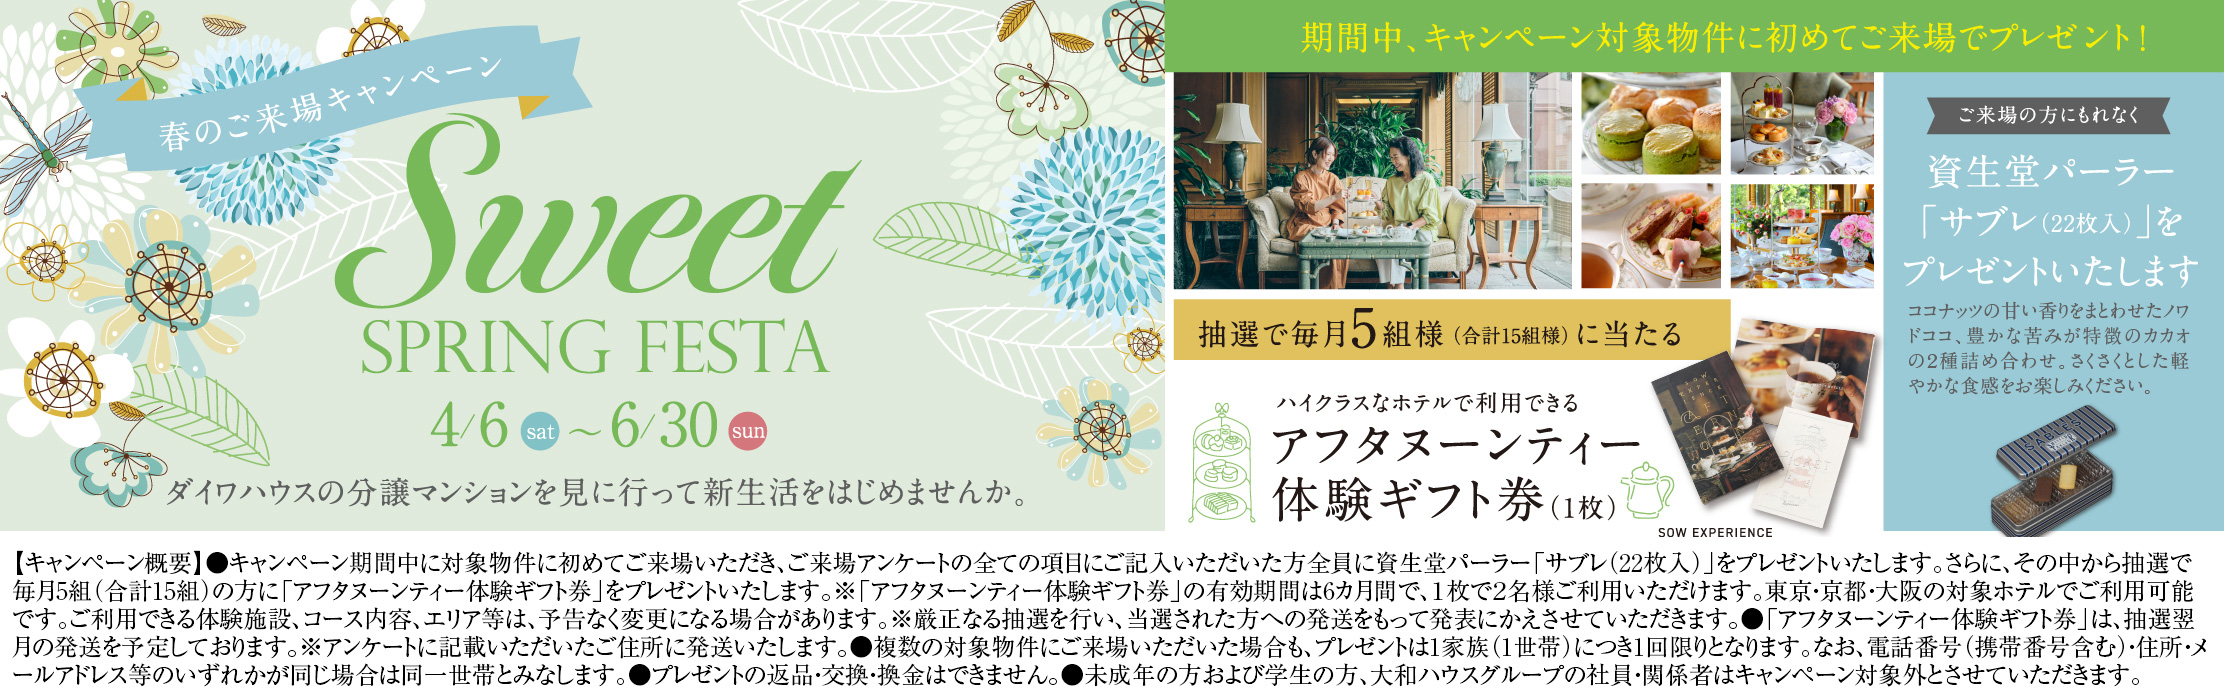 Sweet SPRING FESTA 4/6(土)〜6/30(日)